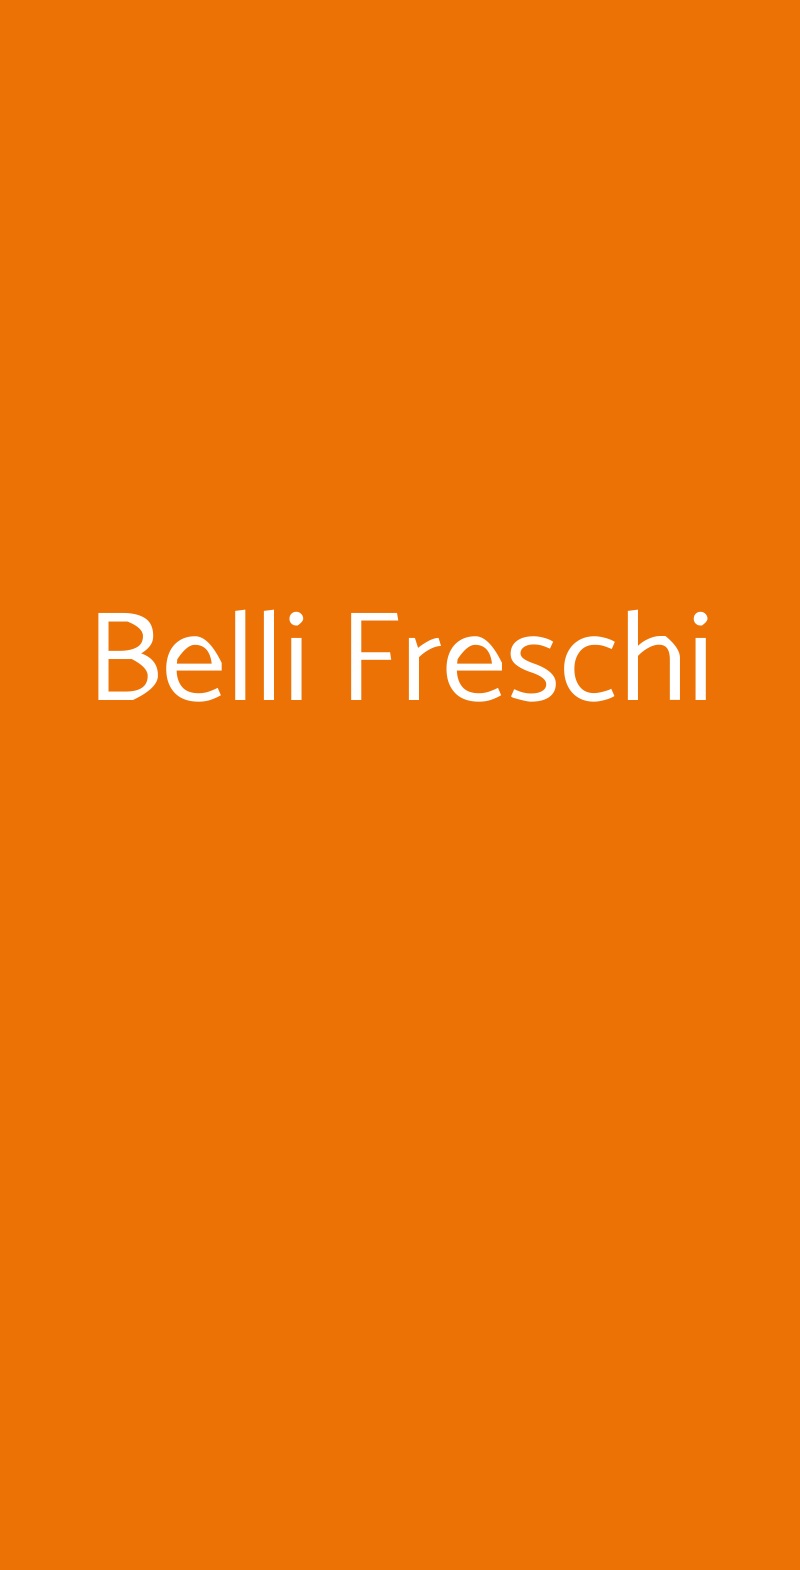 Belli Freschi Milano menù 1 pagina